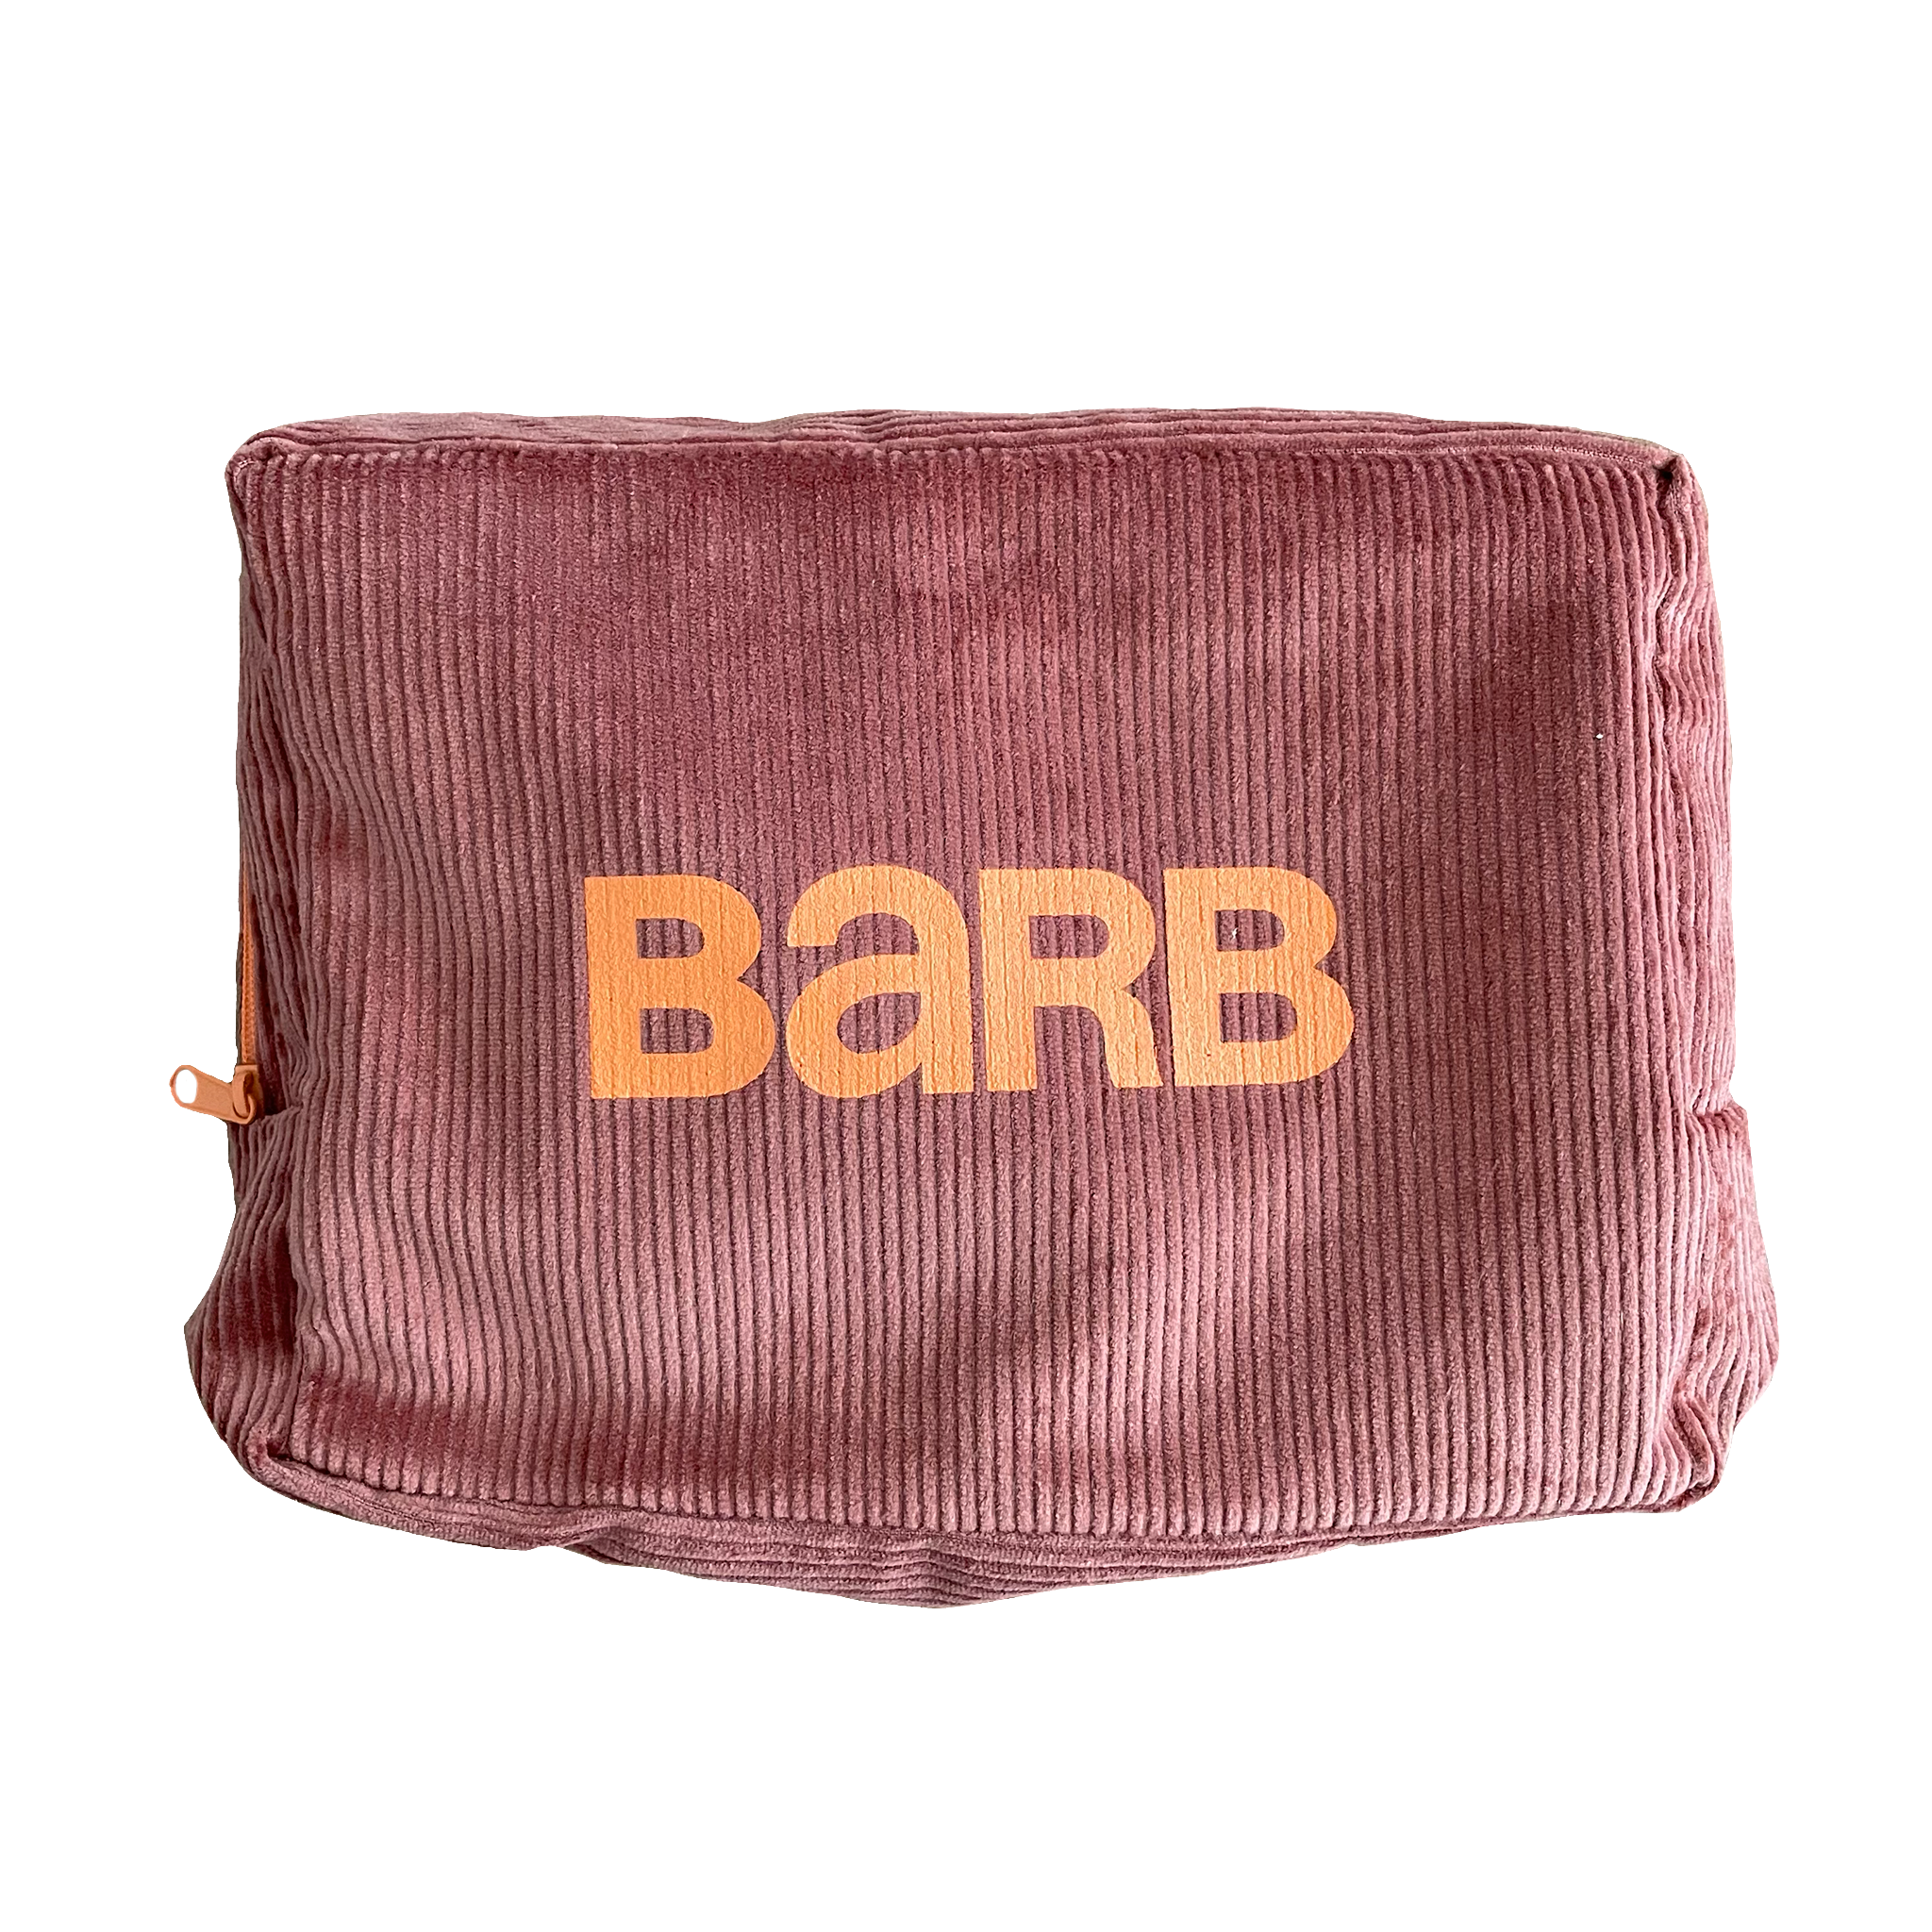 Cinnamon colored soft corduroy bag with orange Barb logo and orange zipper